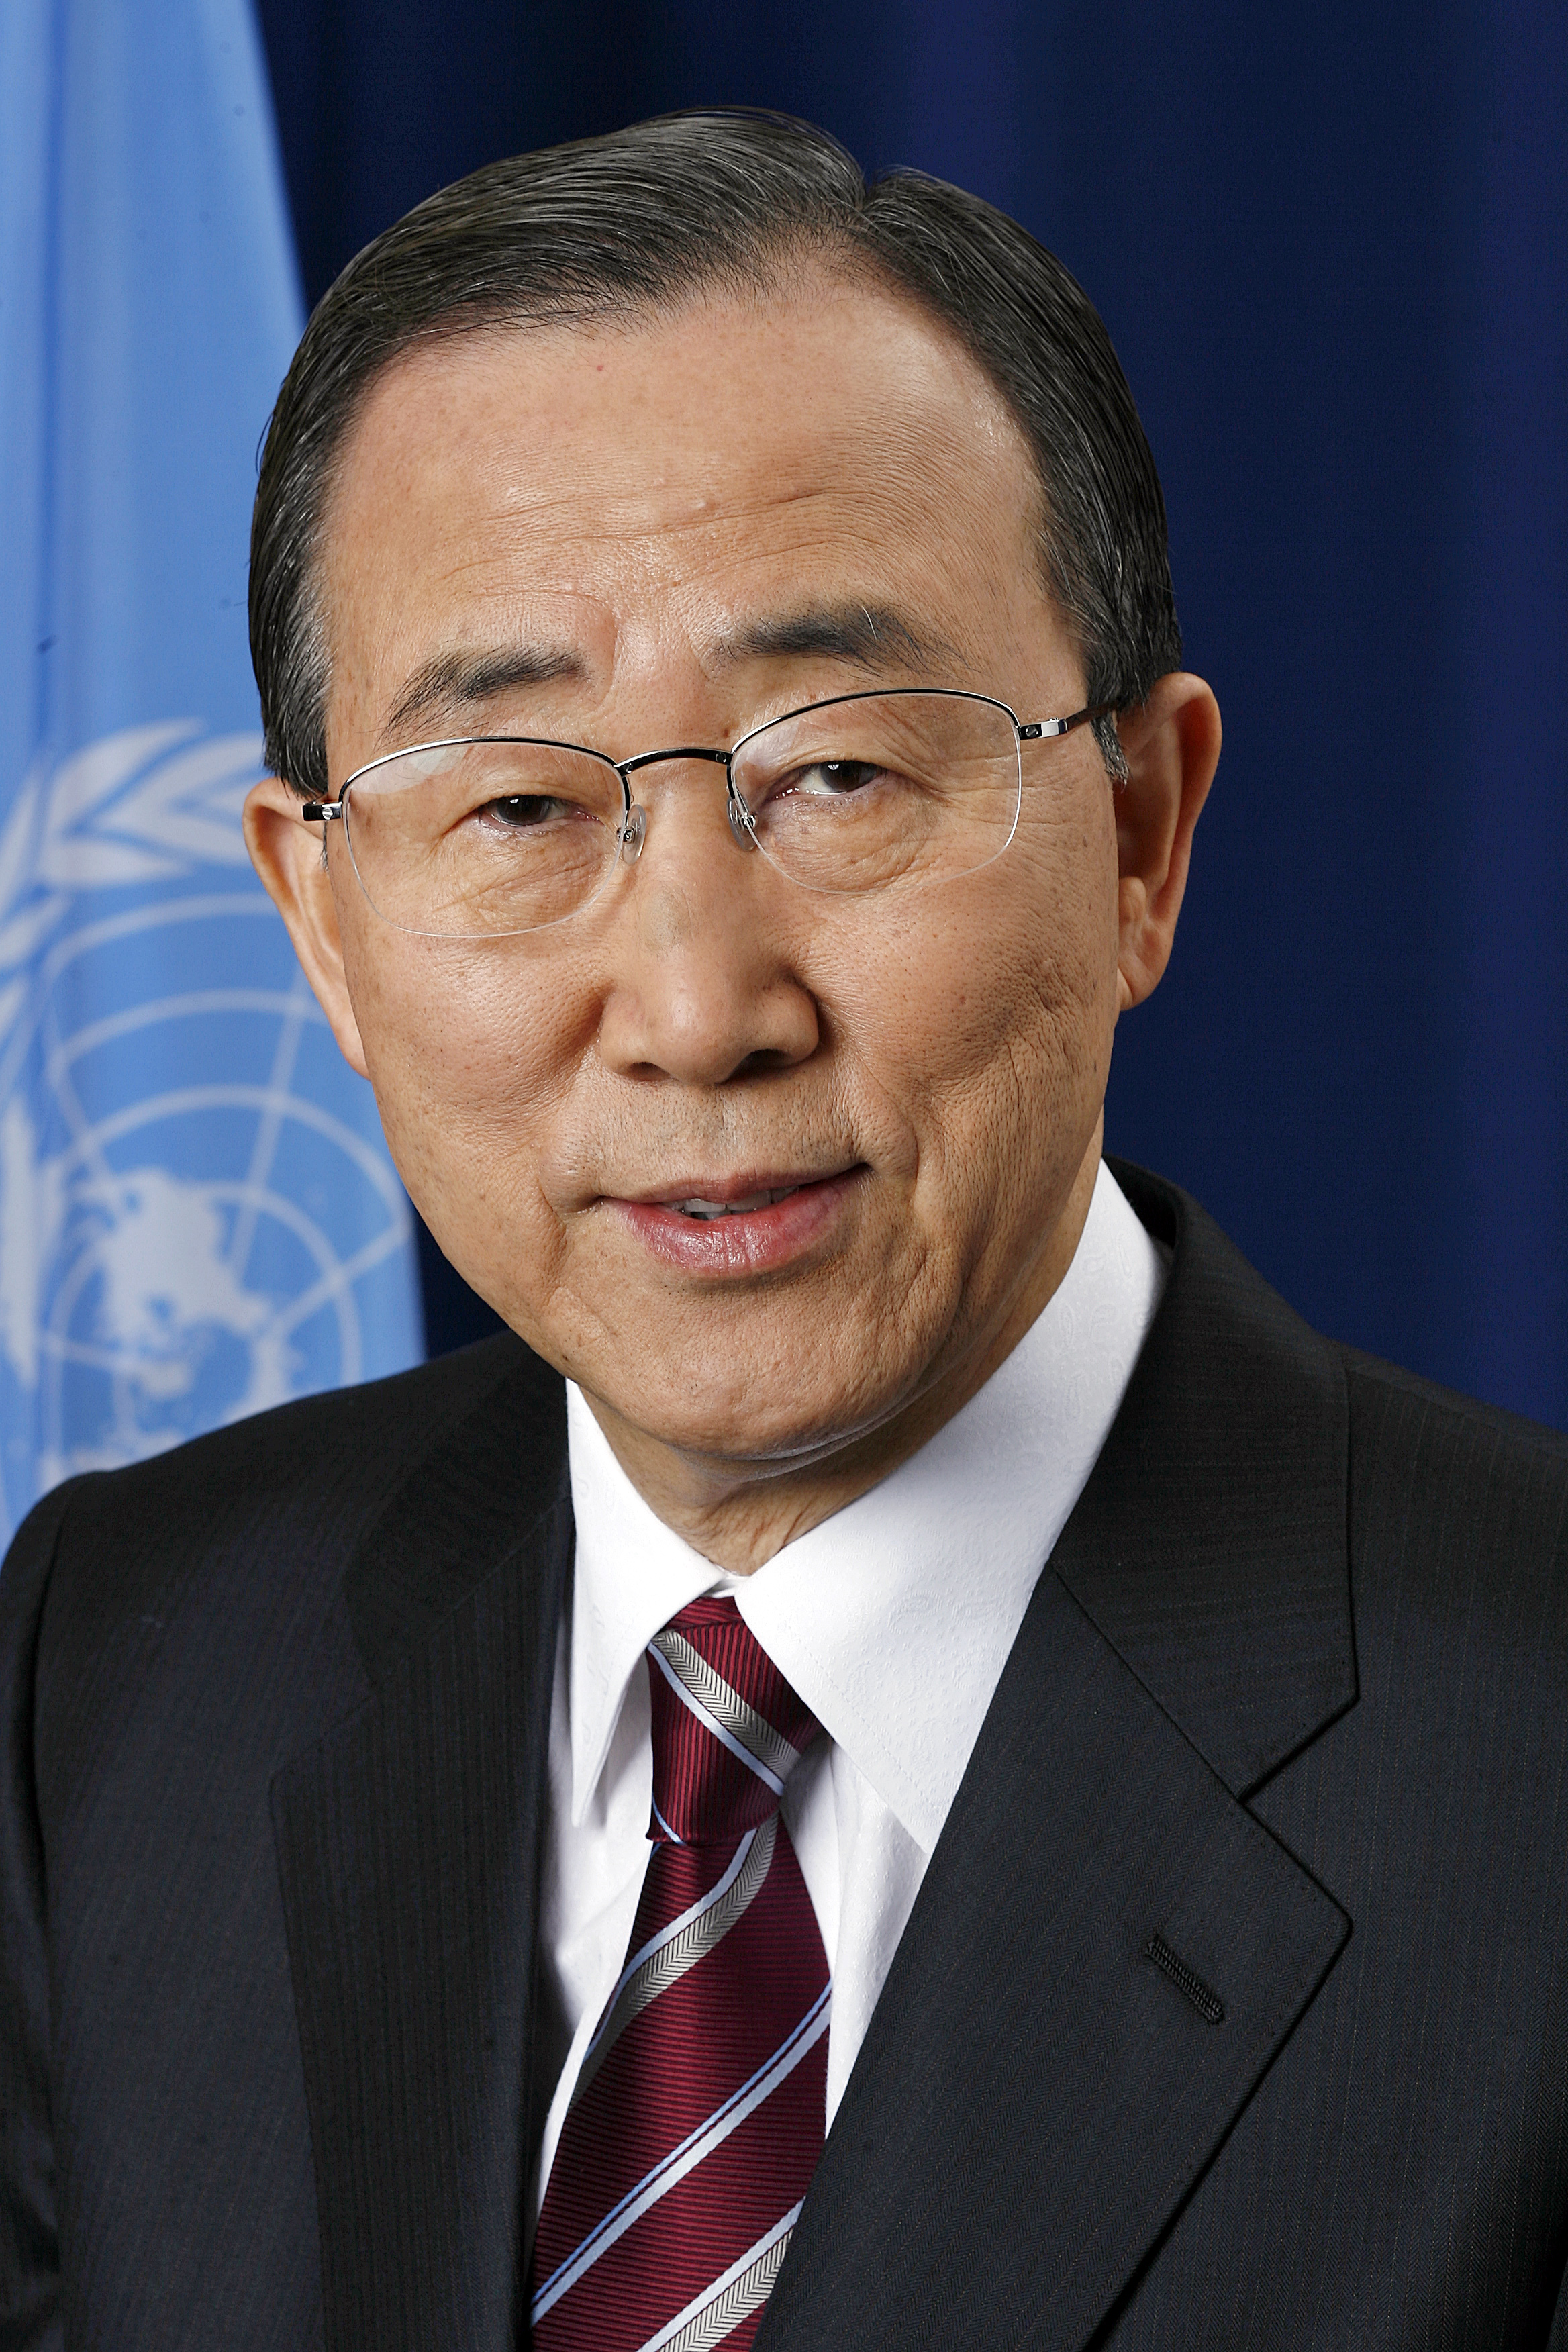 Ban Ki-moon headshot